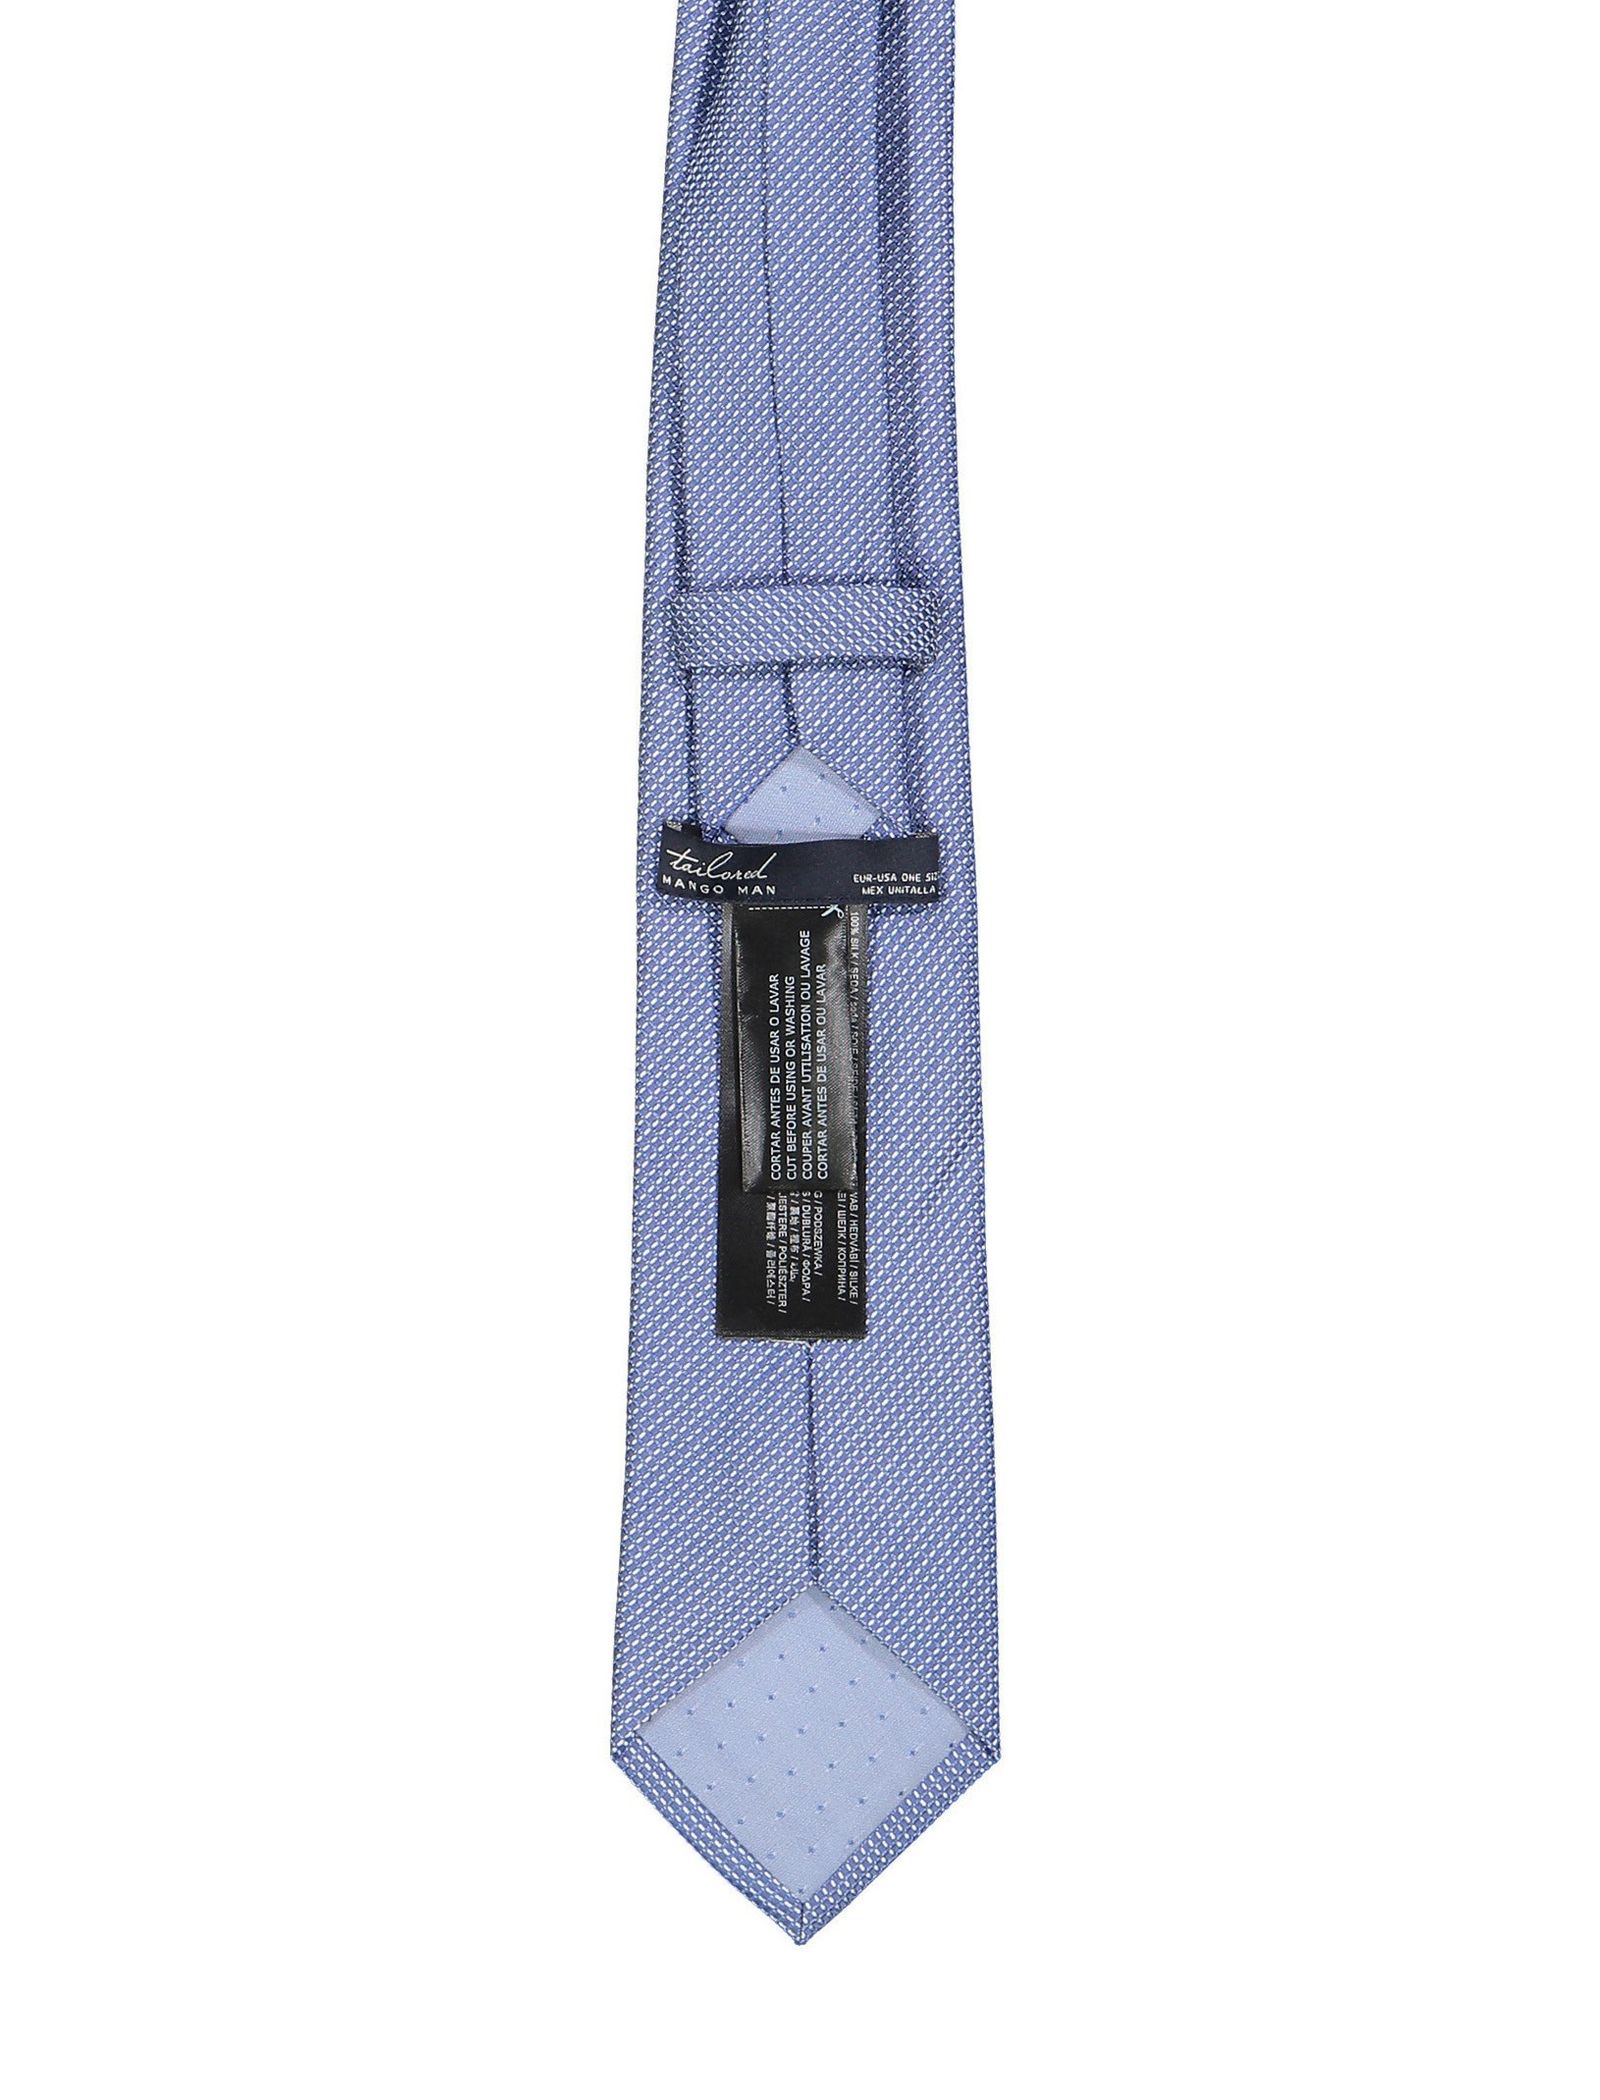 کراوات مانگو مدل 23090555 تک سایز - آبي روشن - 3